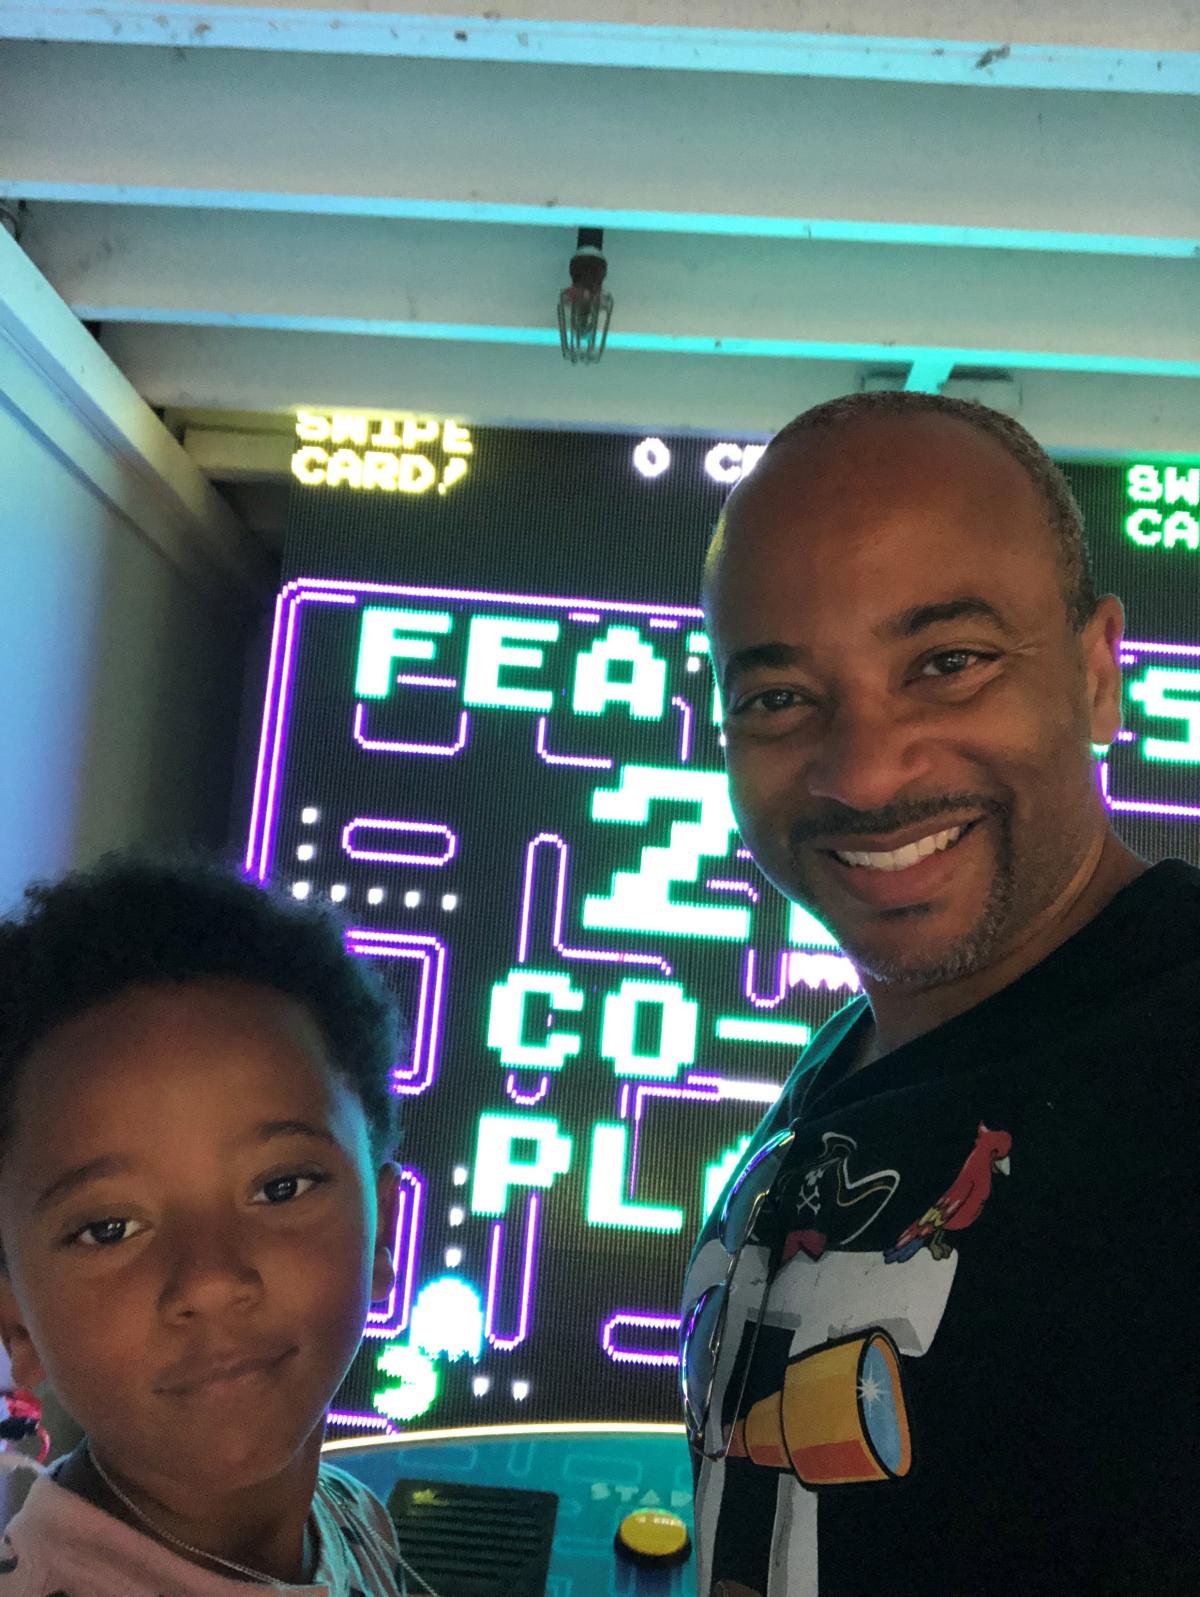 Raheem Beyah and his son play arcade video games